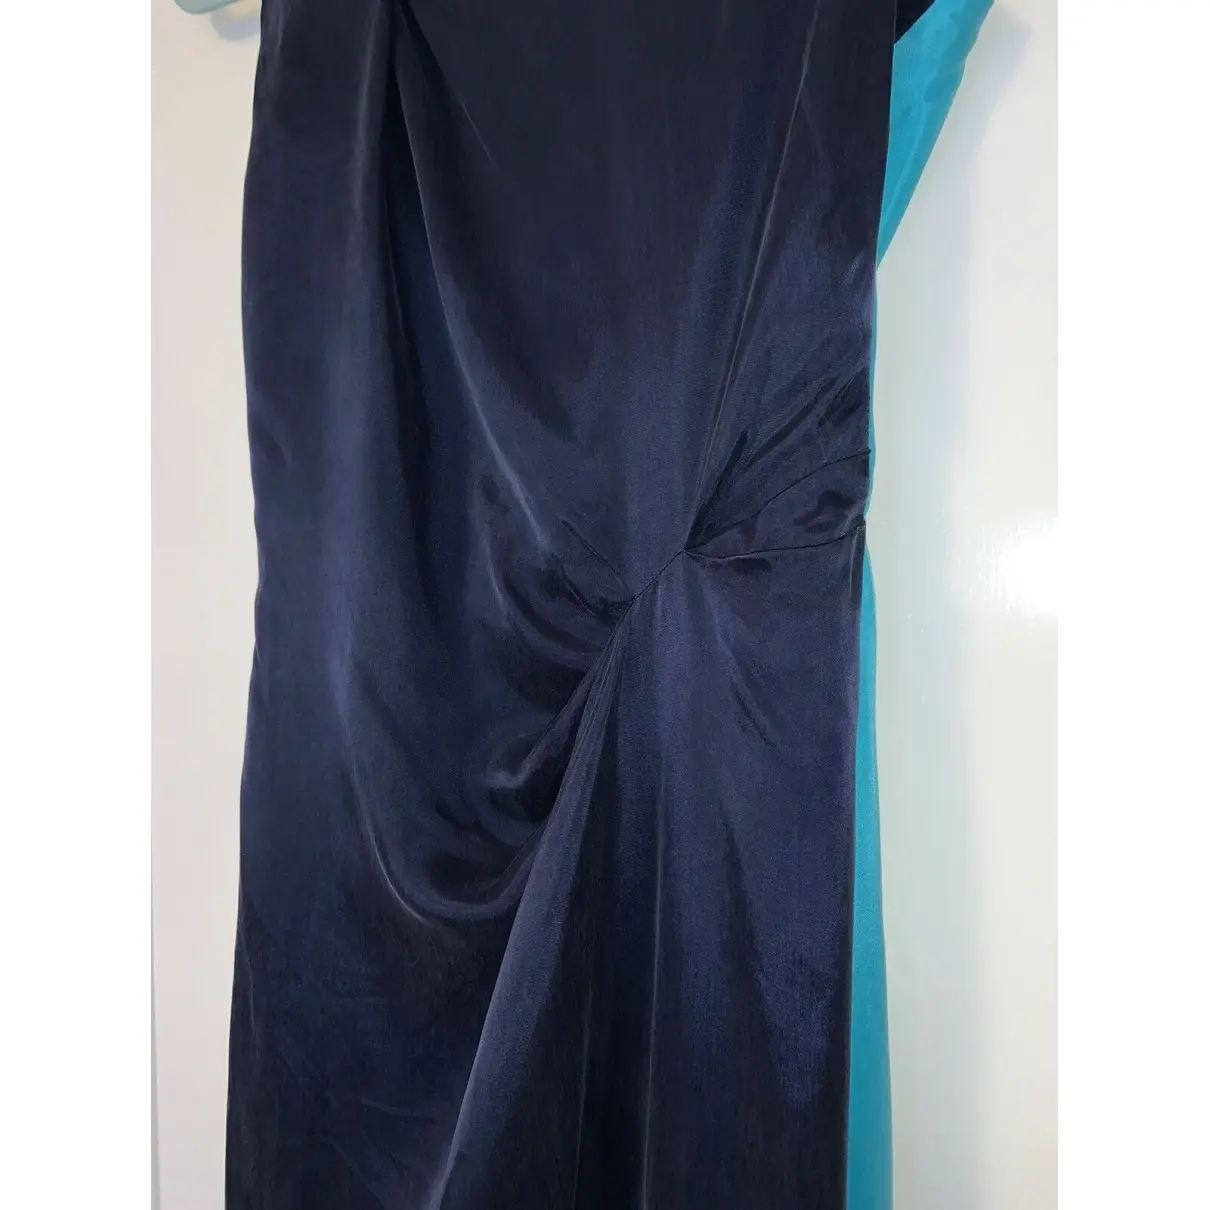 Buy Roksanda Ilincic Silk maxi dress online